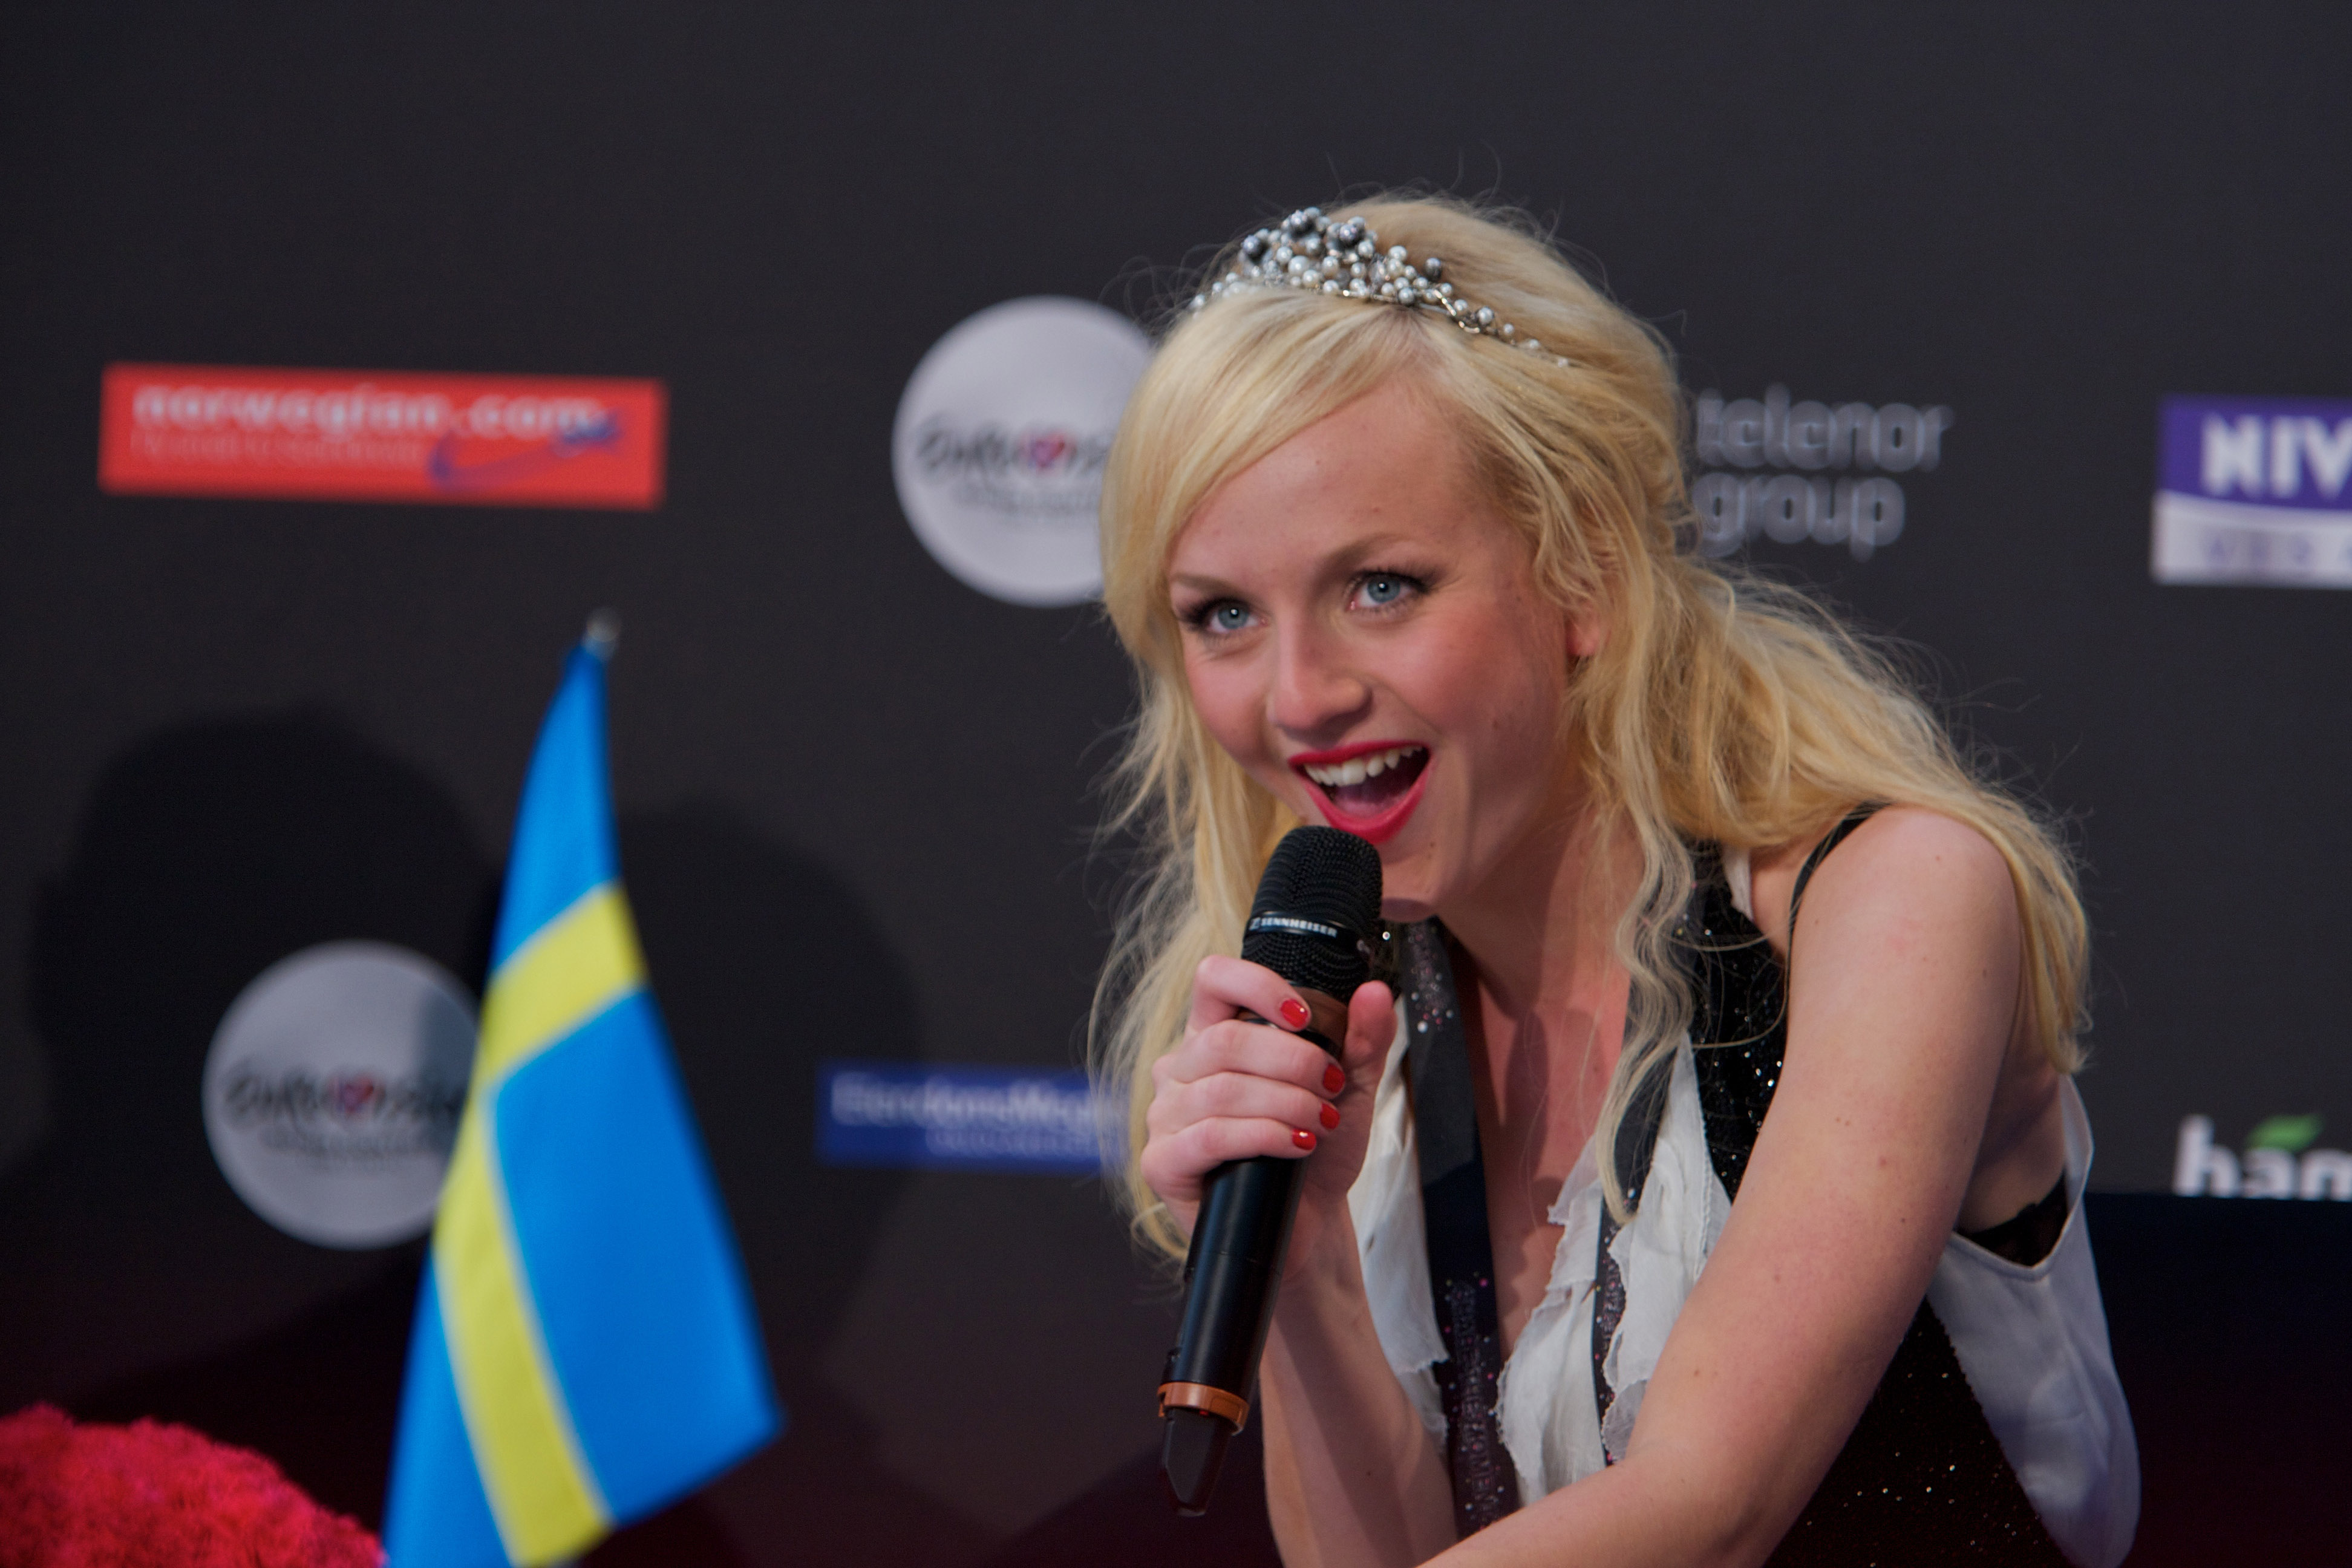 Anna Bergendahl, Eurovision Song Contest